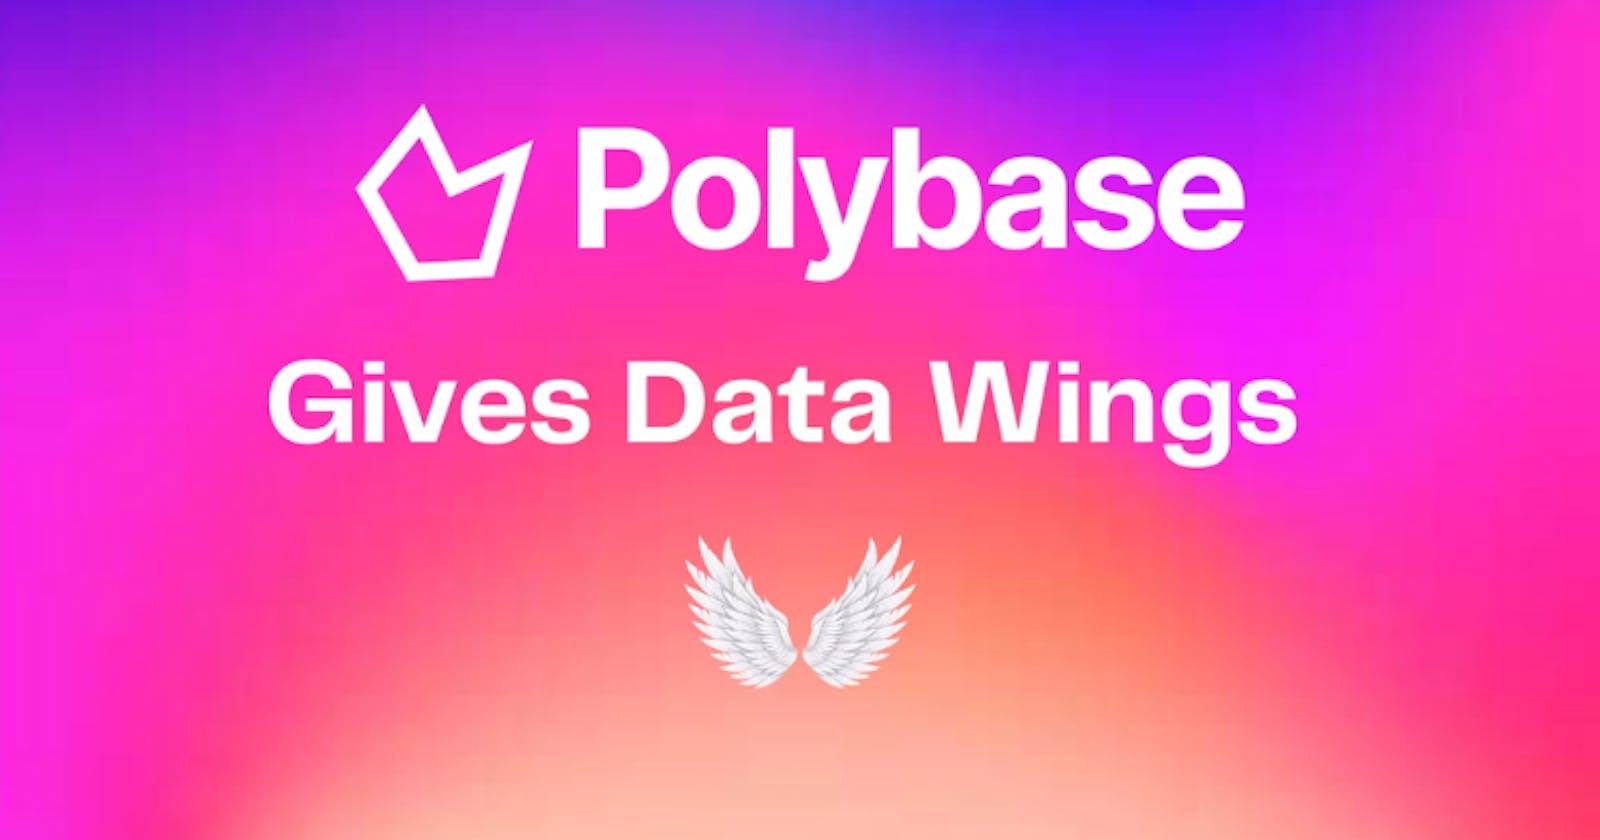 Polybase gives data wiiings